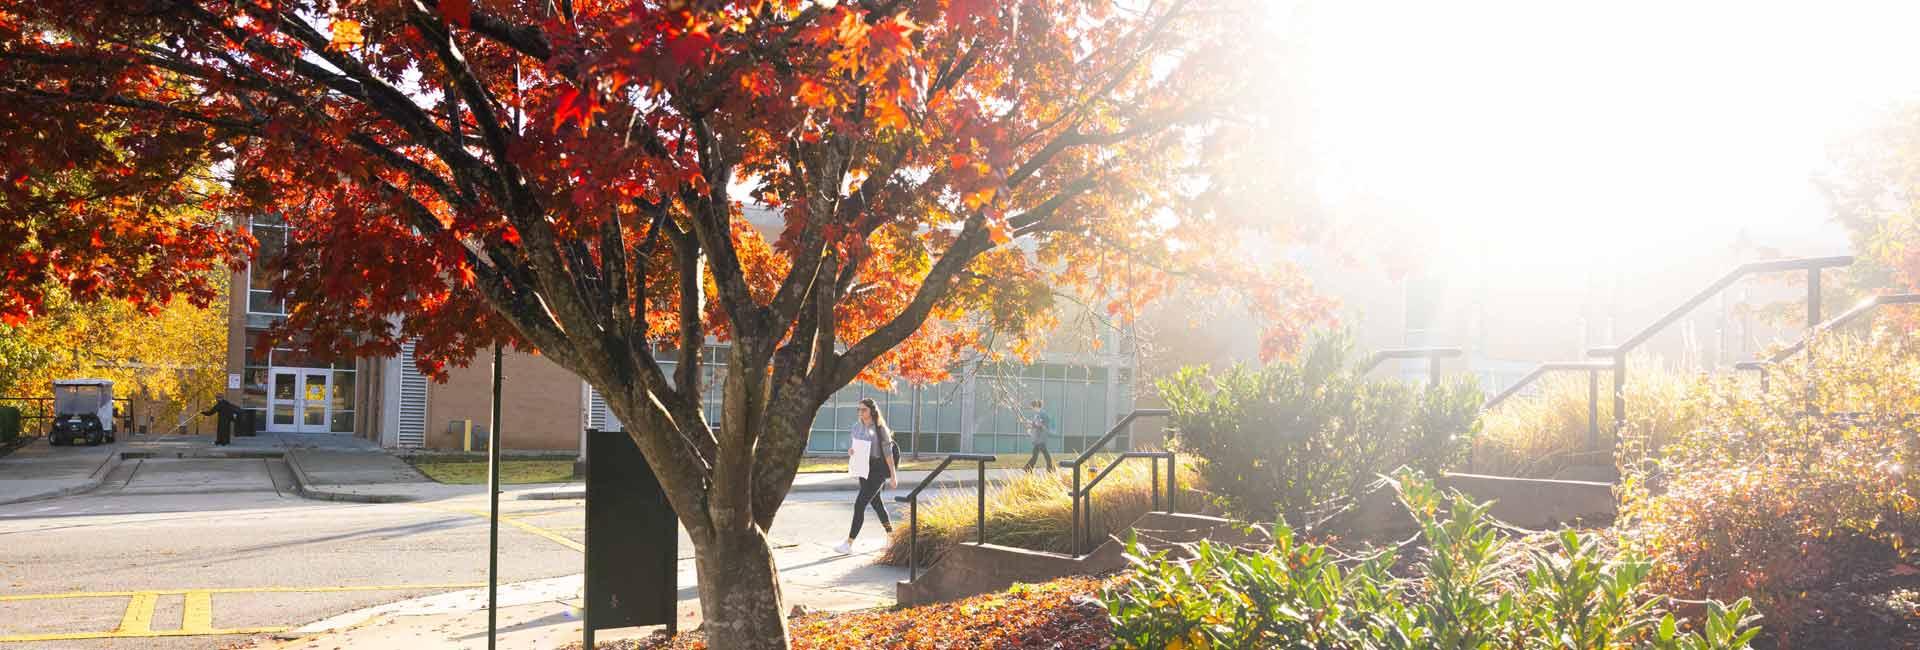 Ksu学生在秋季走过校园